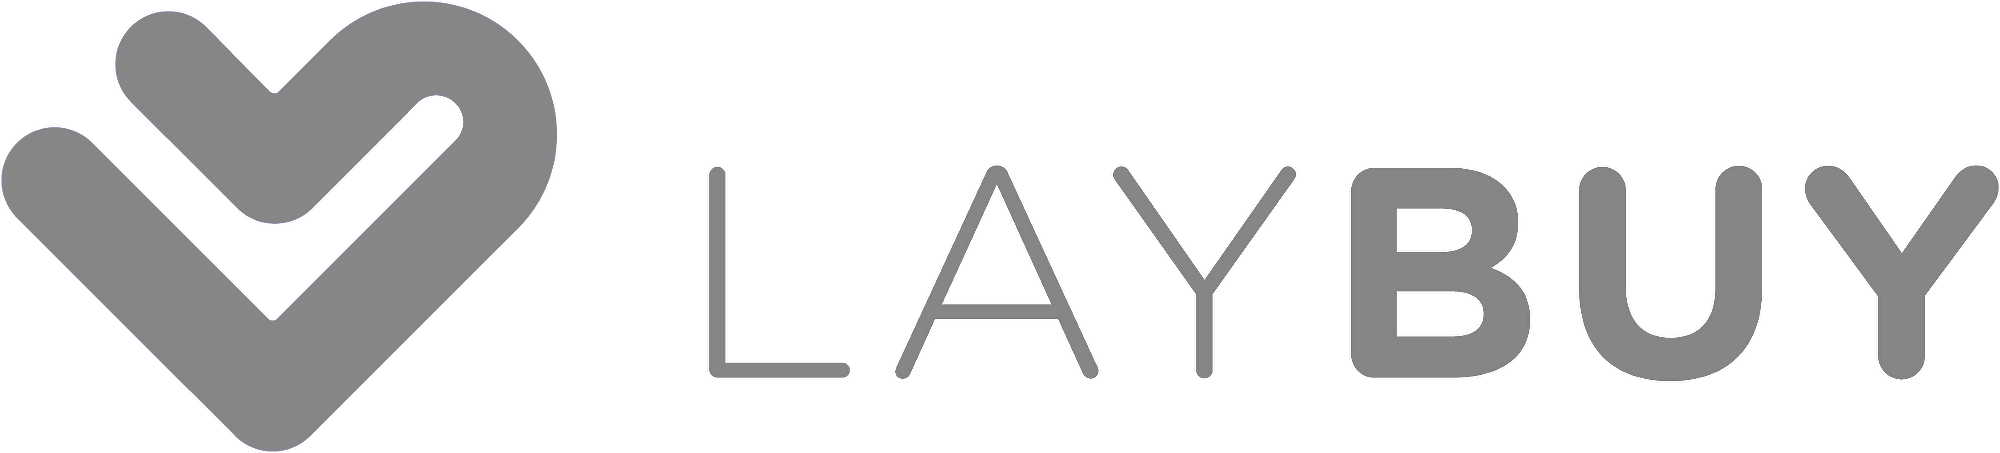 laybuy-logo-grey